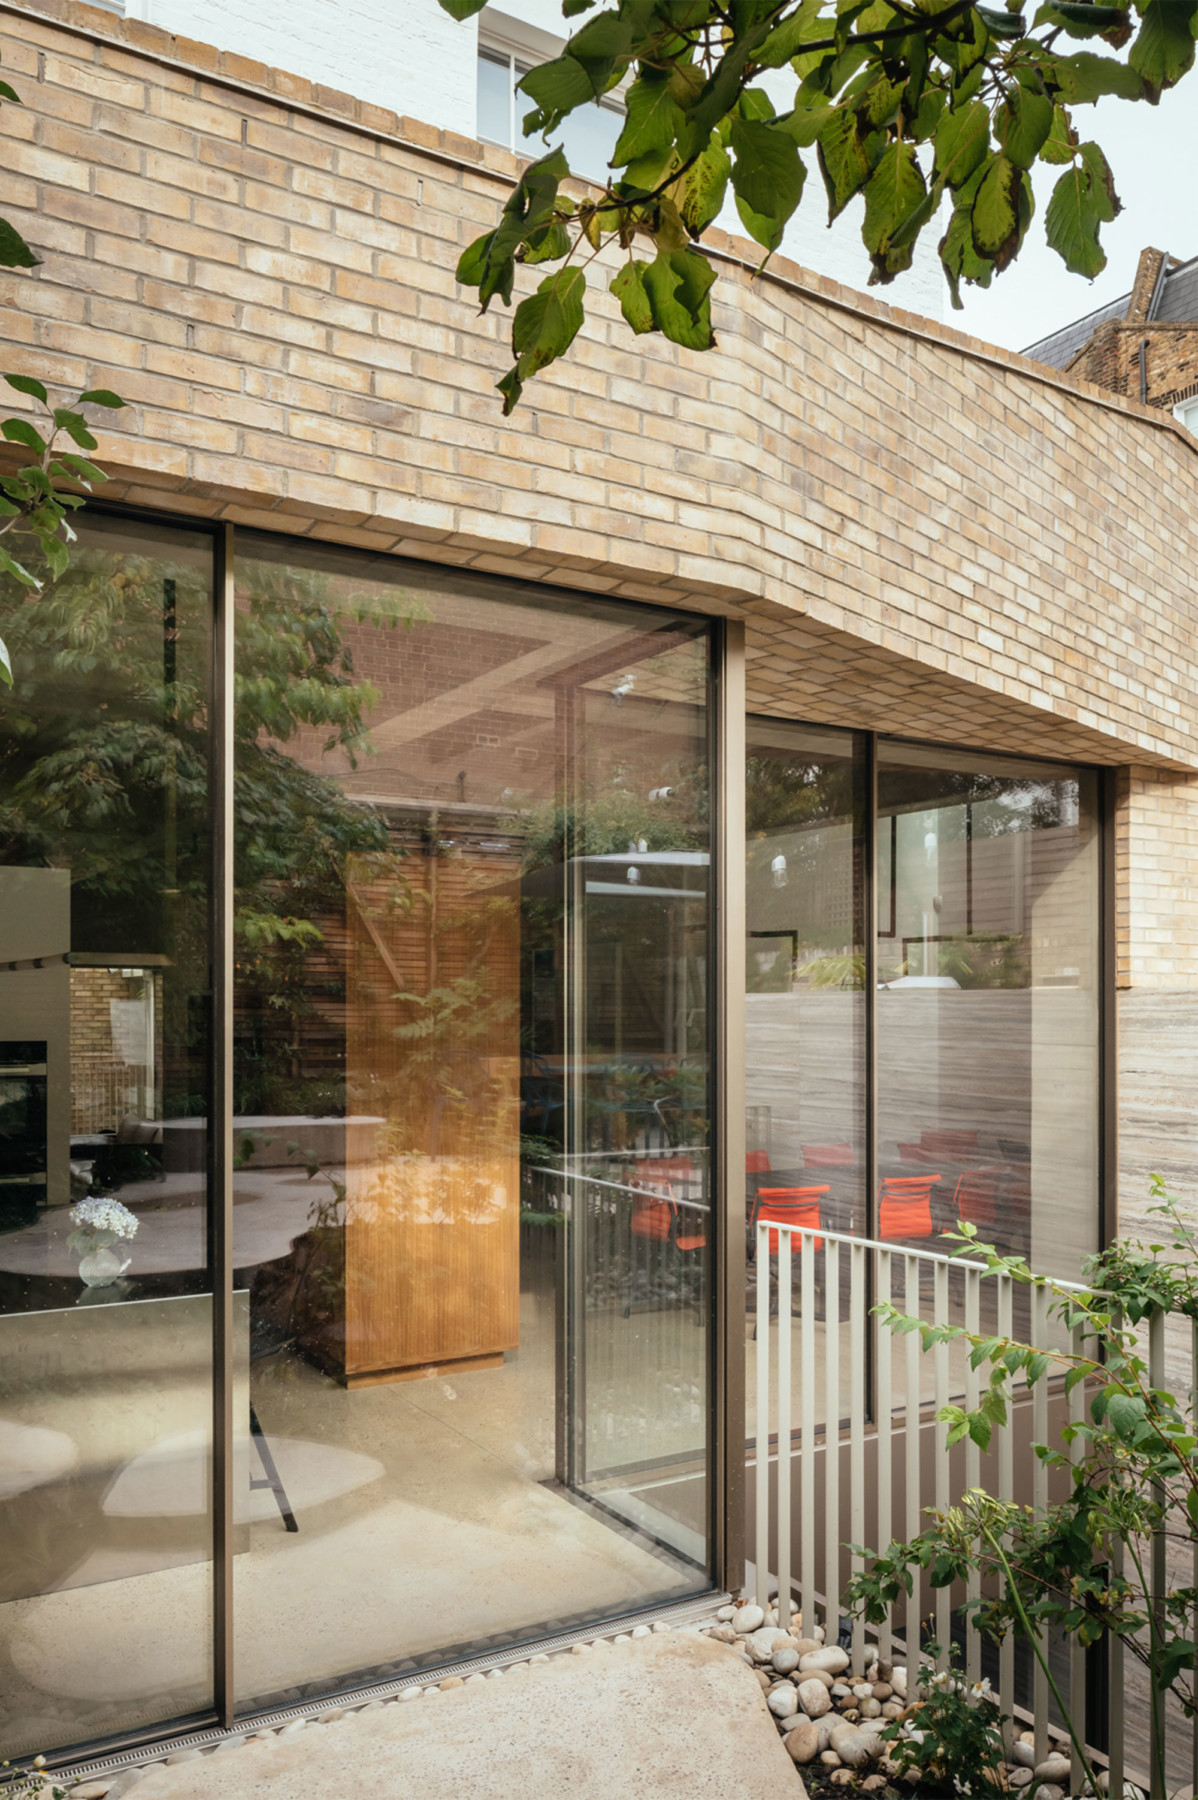 Jamie-fobert-architects-house-in-primrose-hill-view-exterior-garden-dining-living-joinery-kitchen-brick-detail.jpg